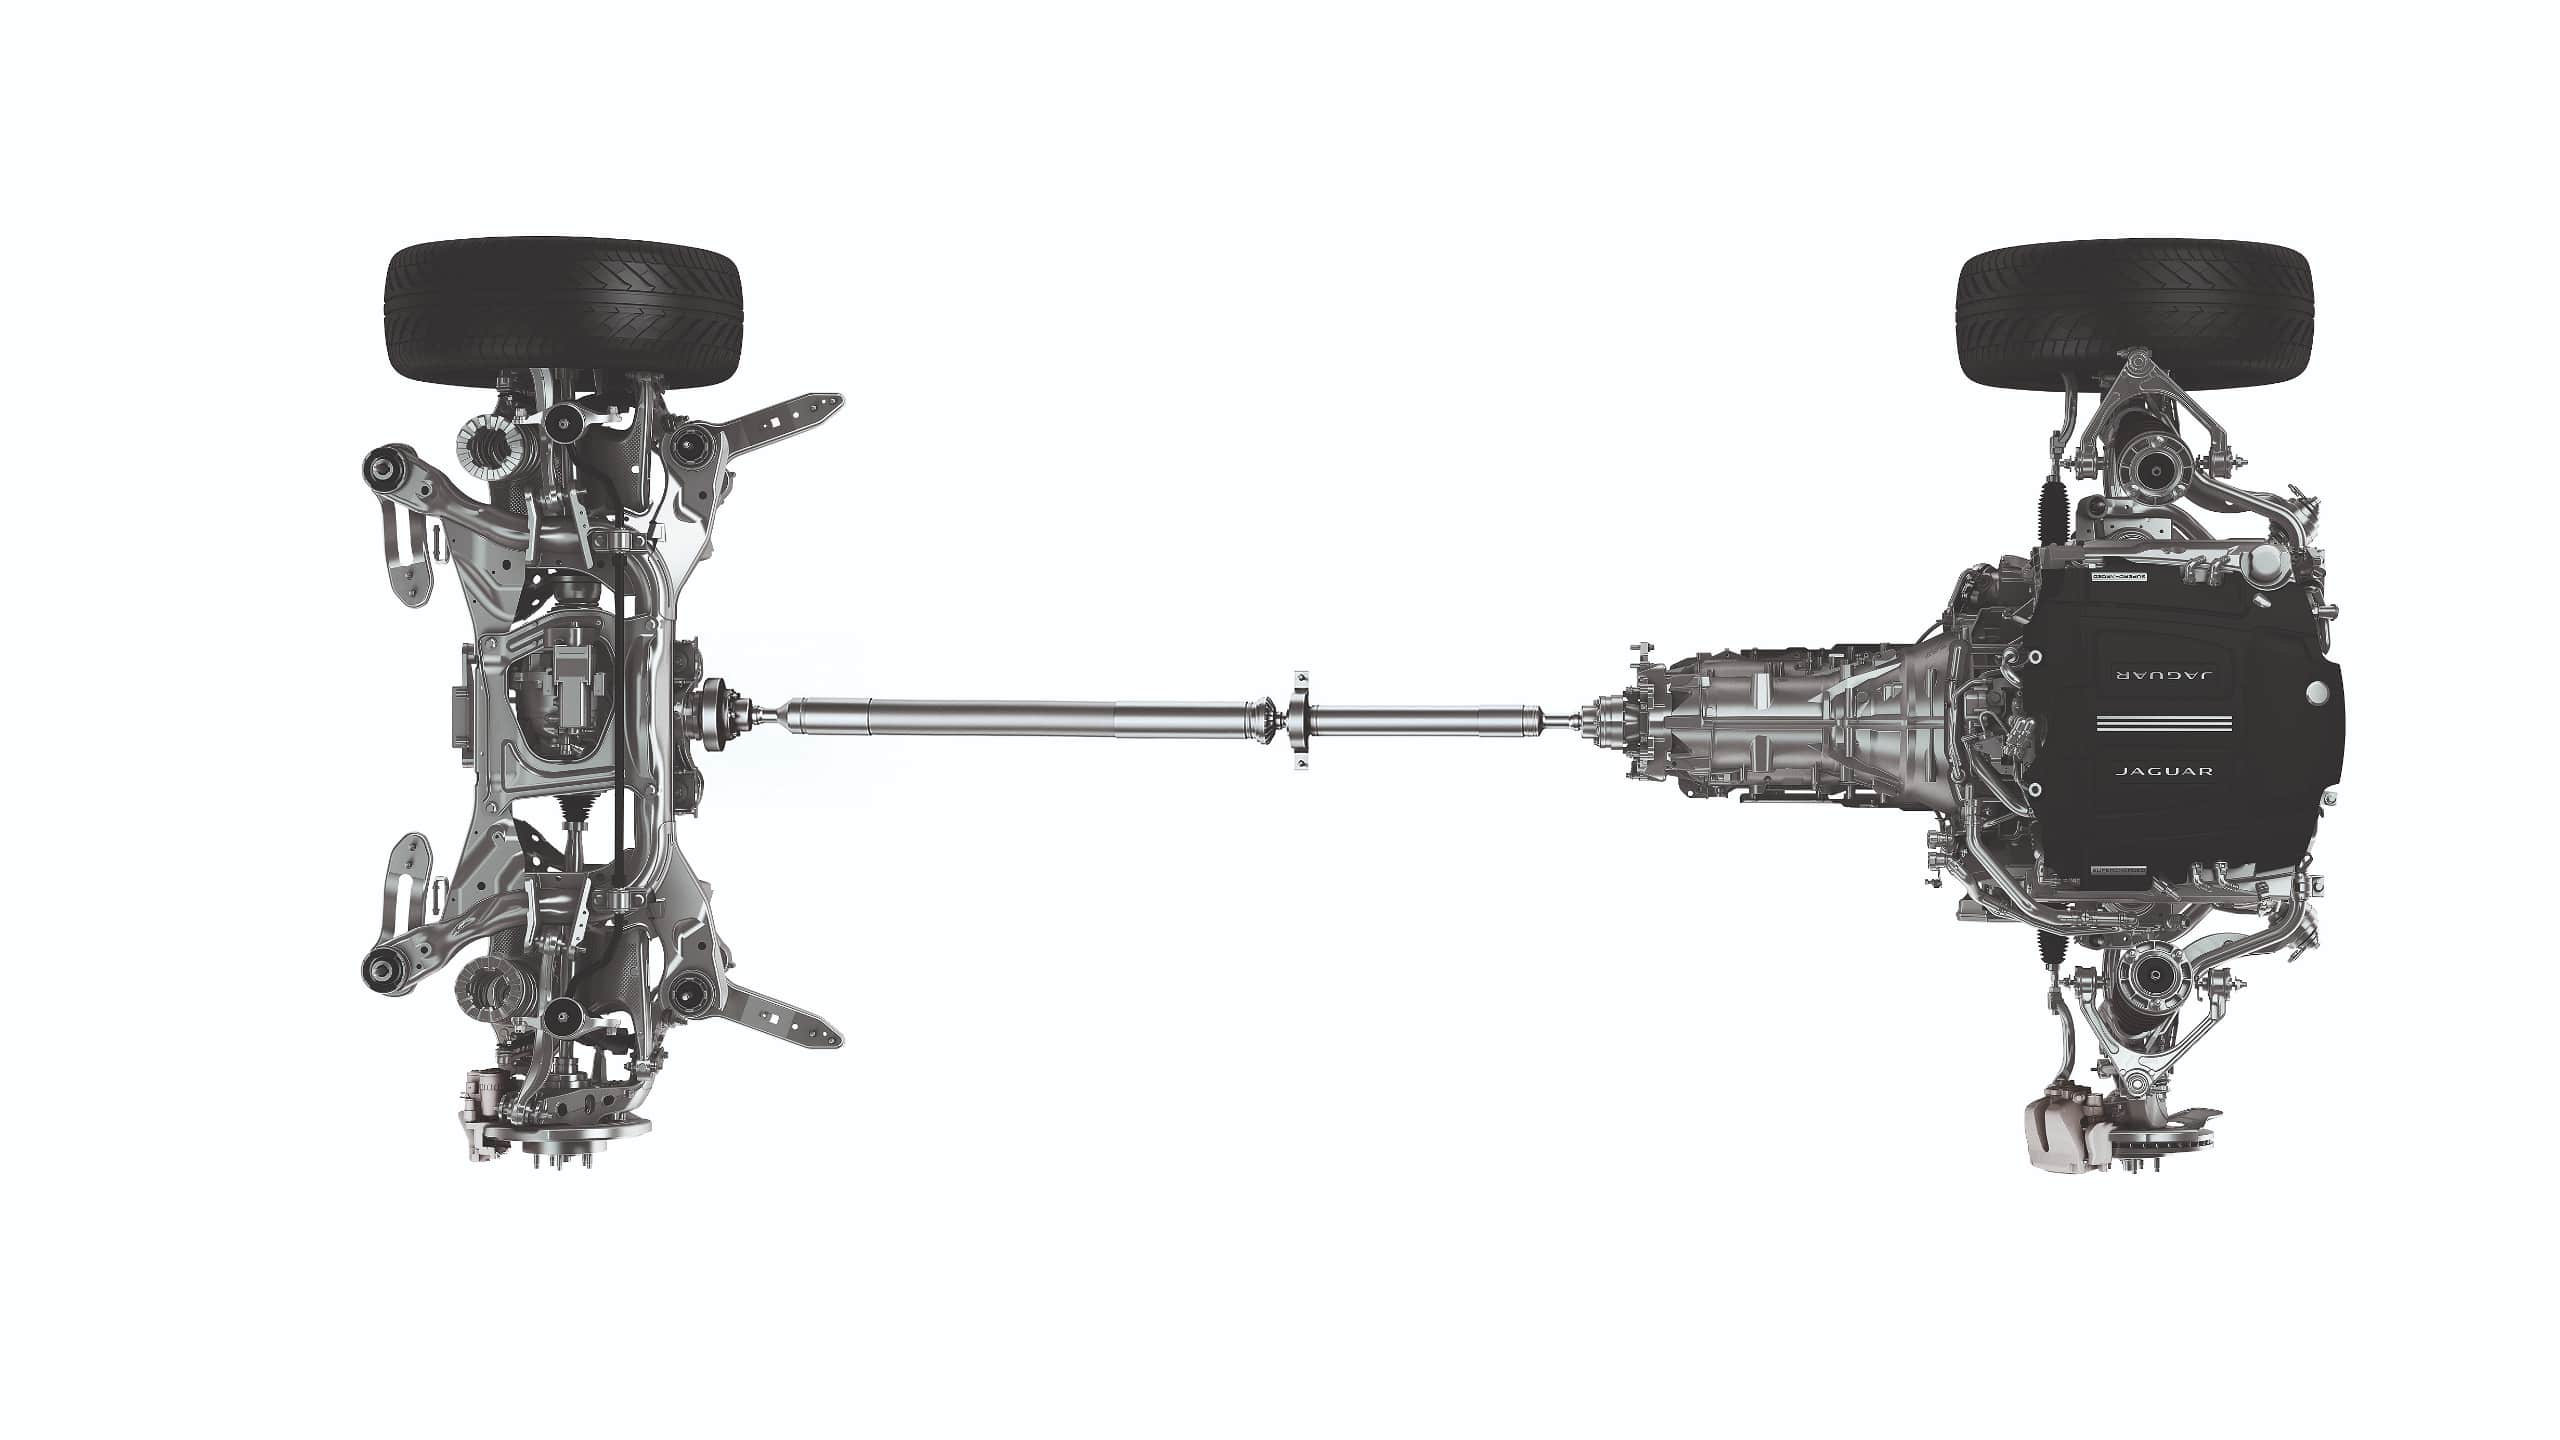 Jaguar aluminum double front suspension and multi-link rear suspension system